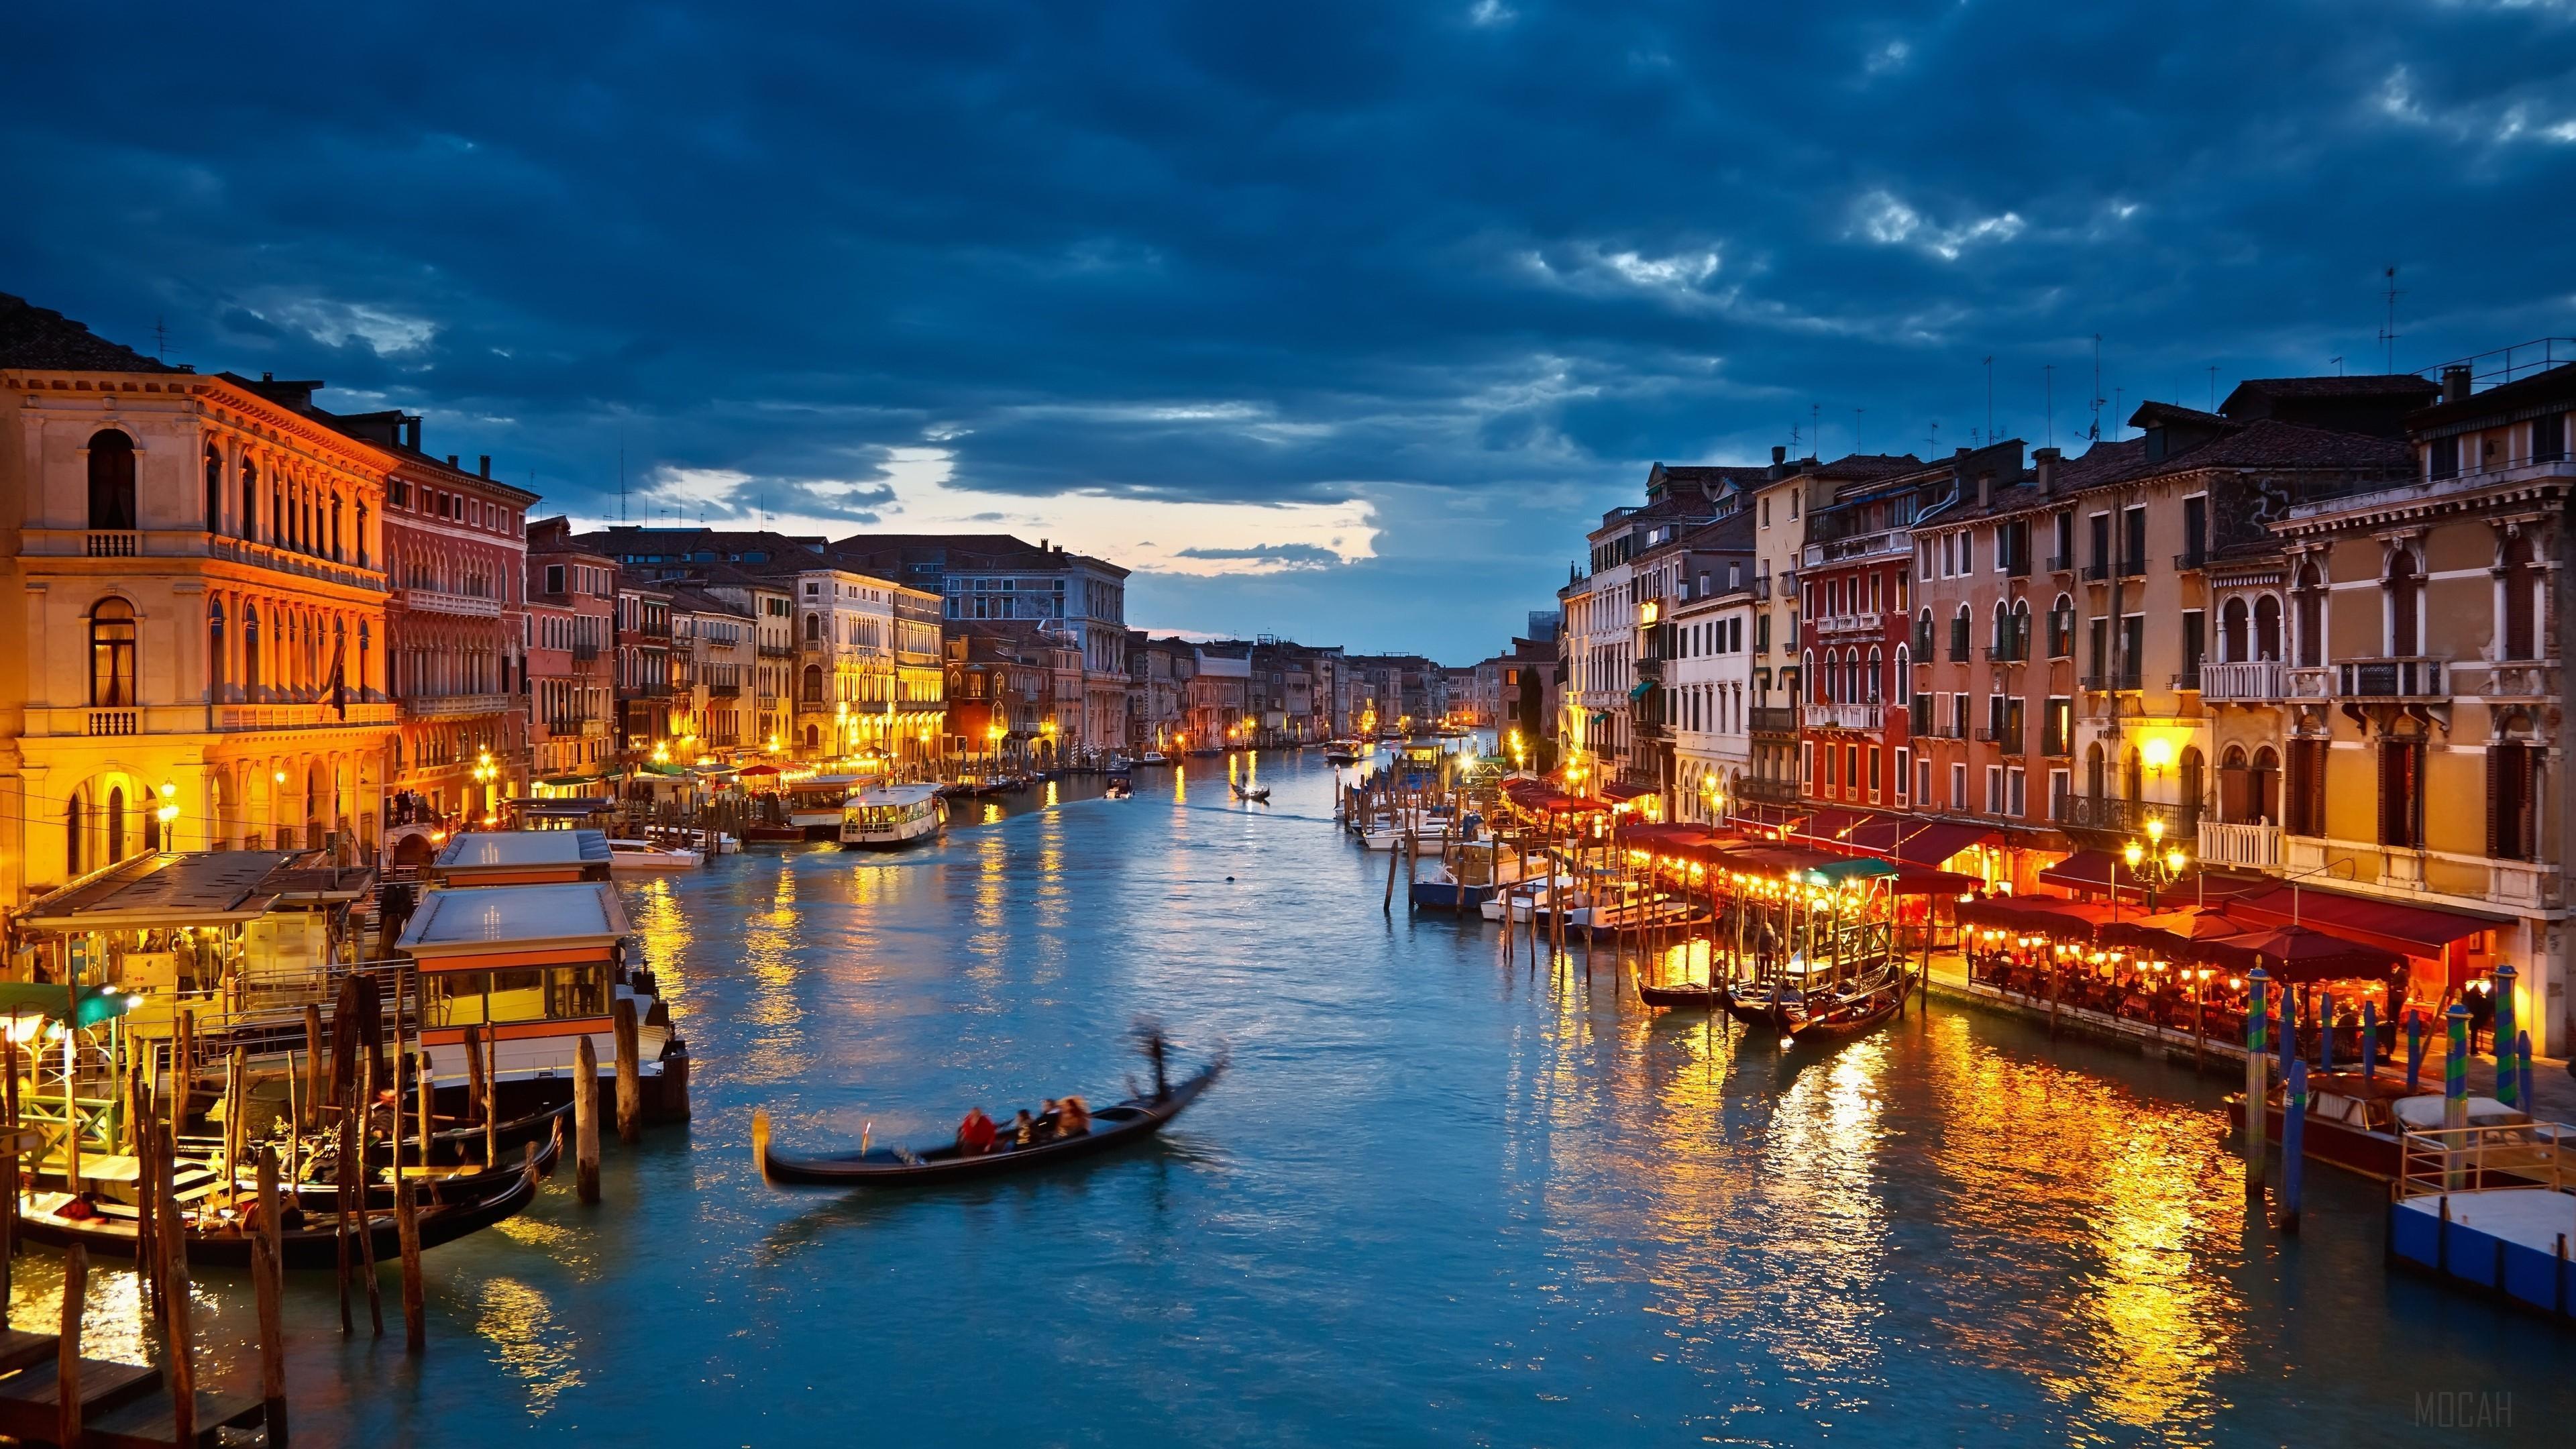 HD wallpaper, Night, Canal, Italy, Light, Gondola, Venice 4K, City